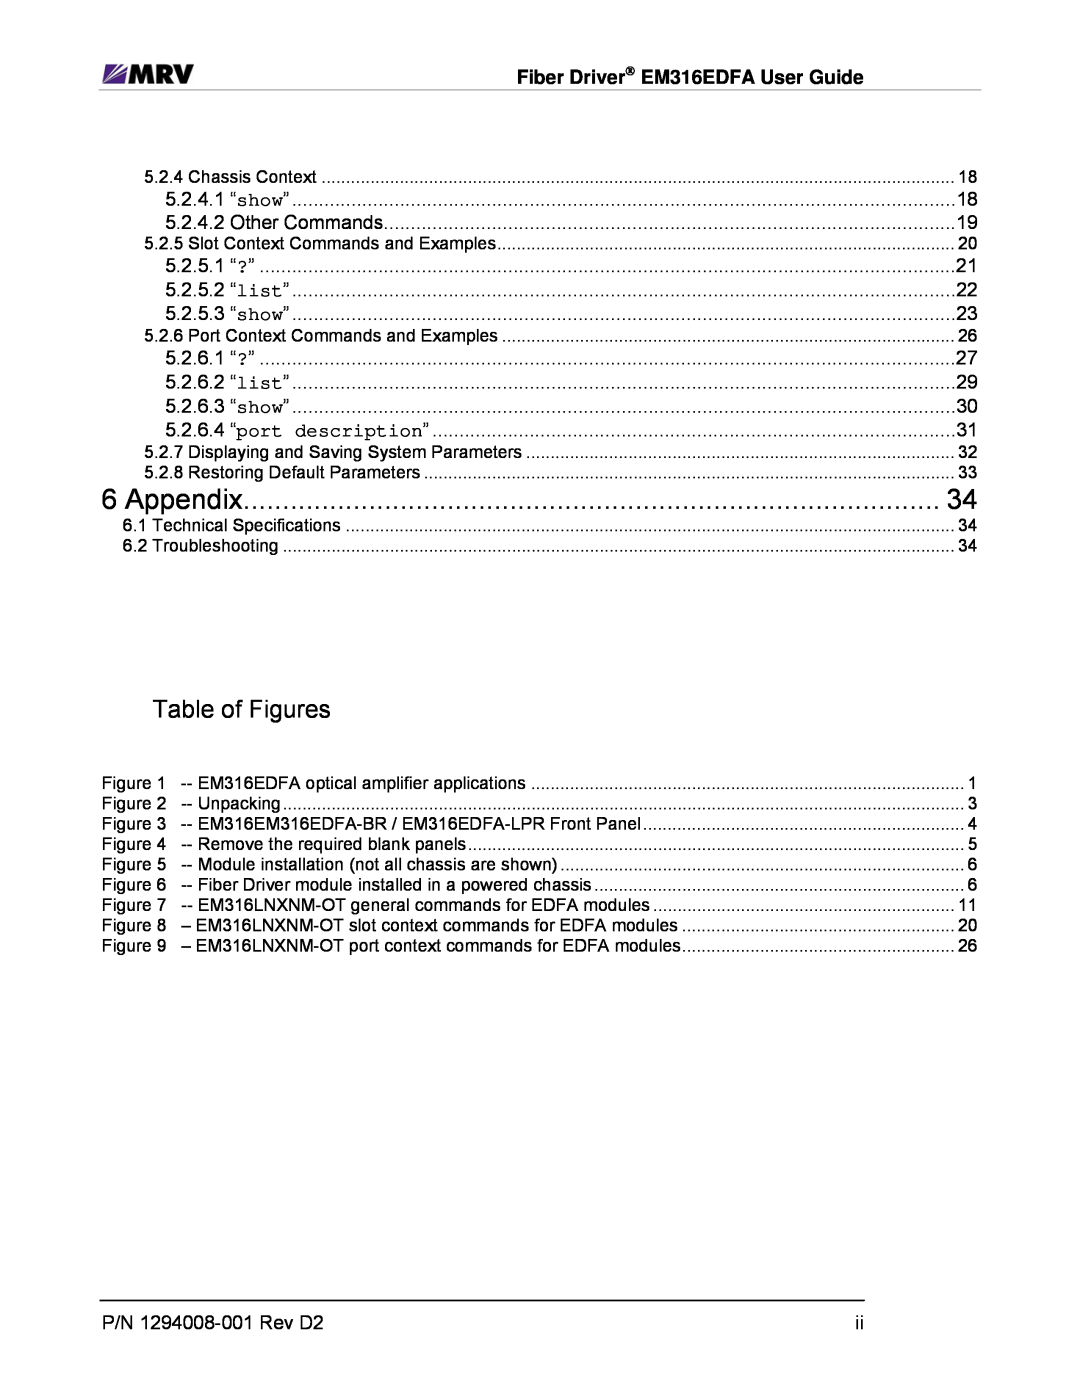 MRV Communications EM316EDFA-LPR, EM316EDFA-BR manual Appendix, Table of Figures 